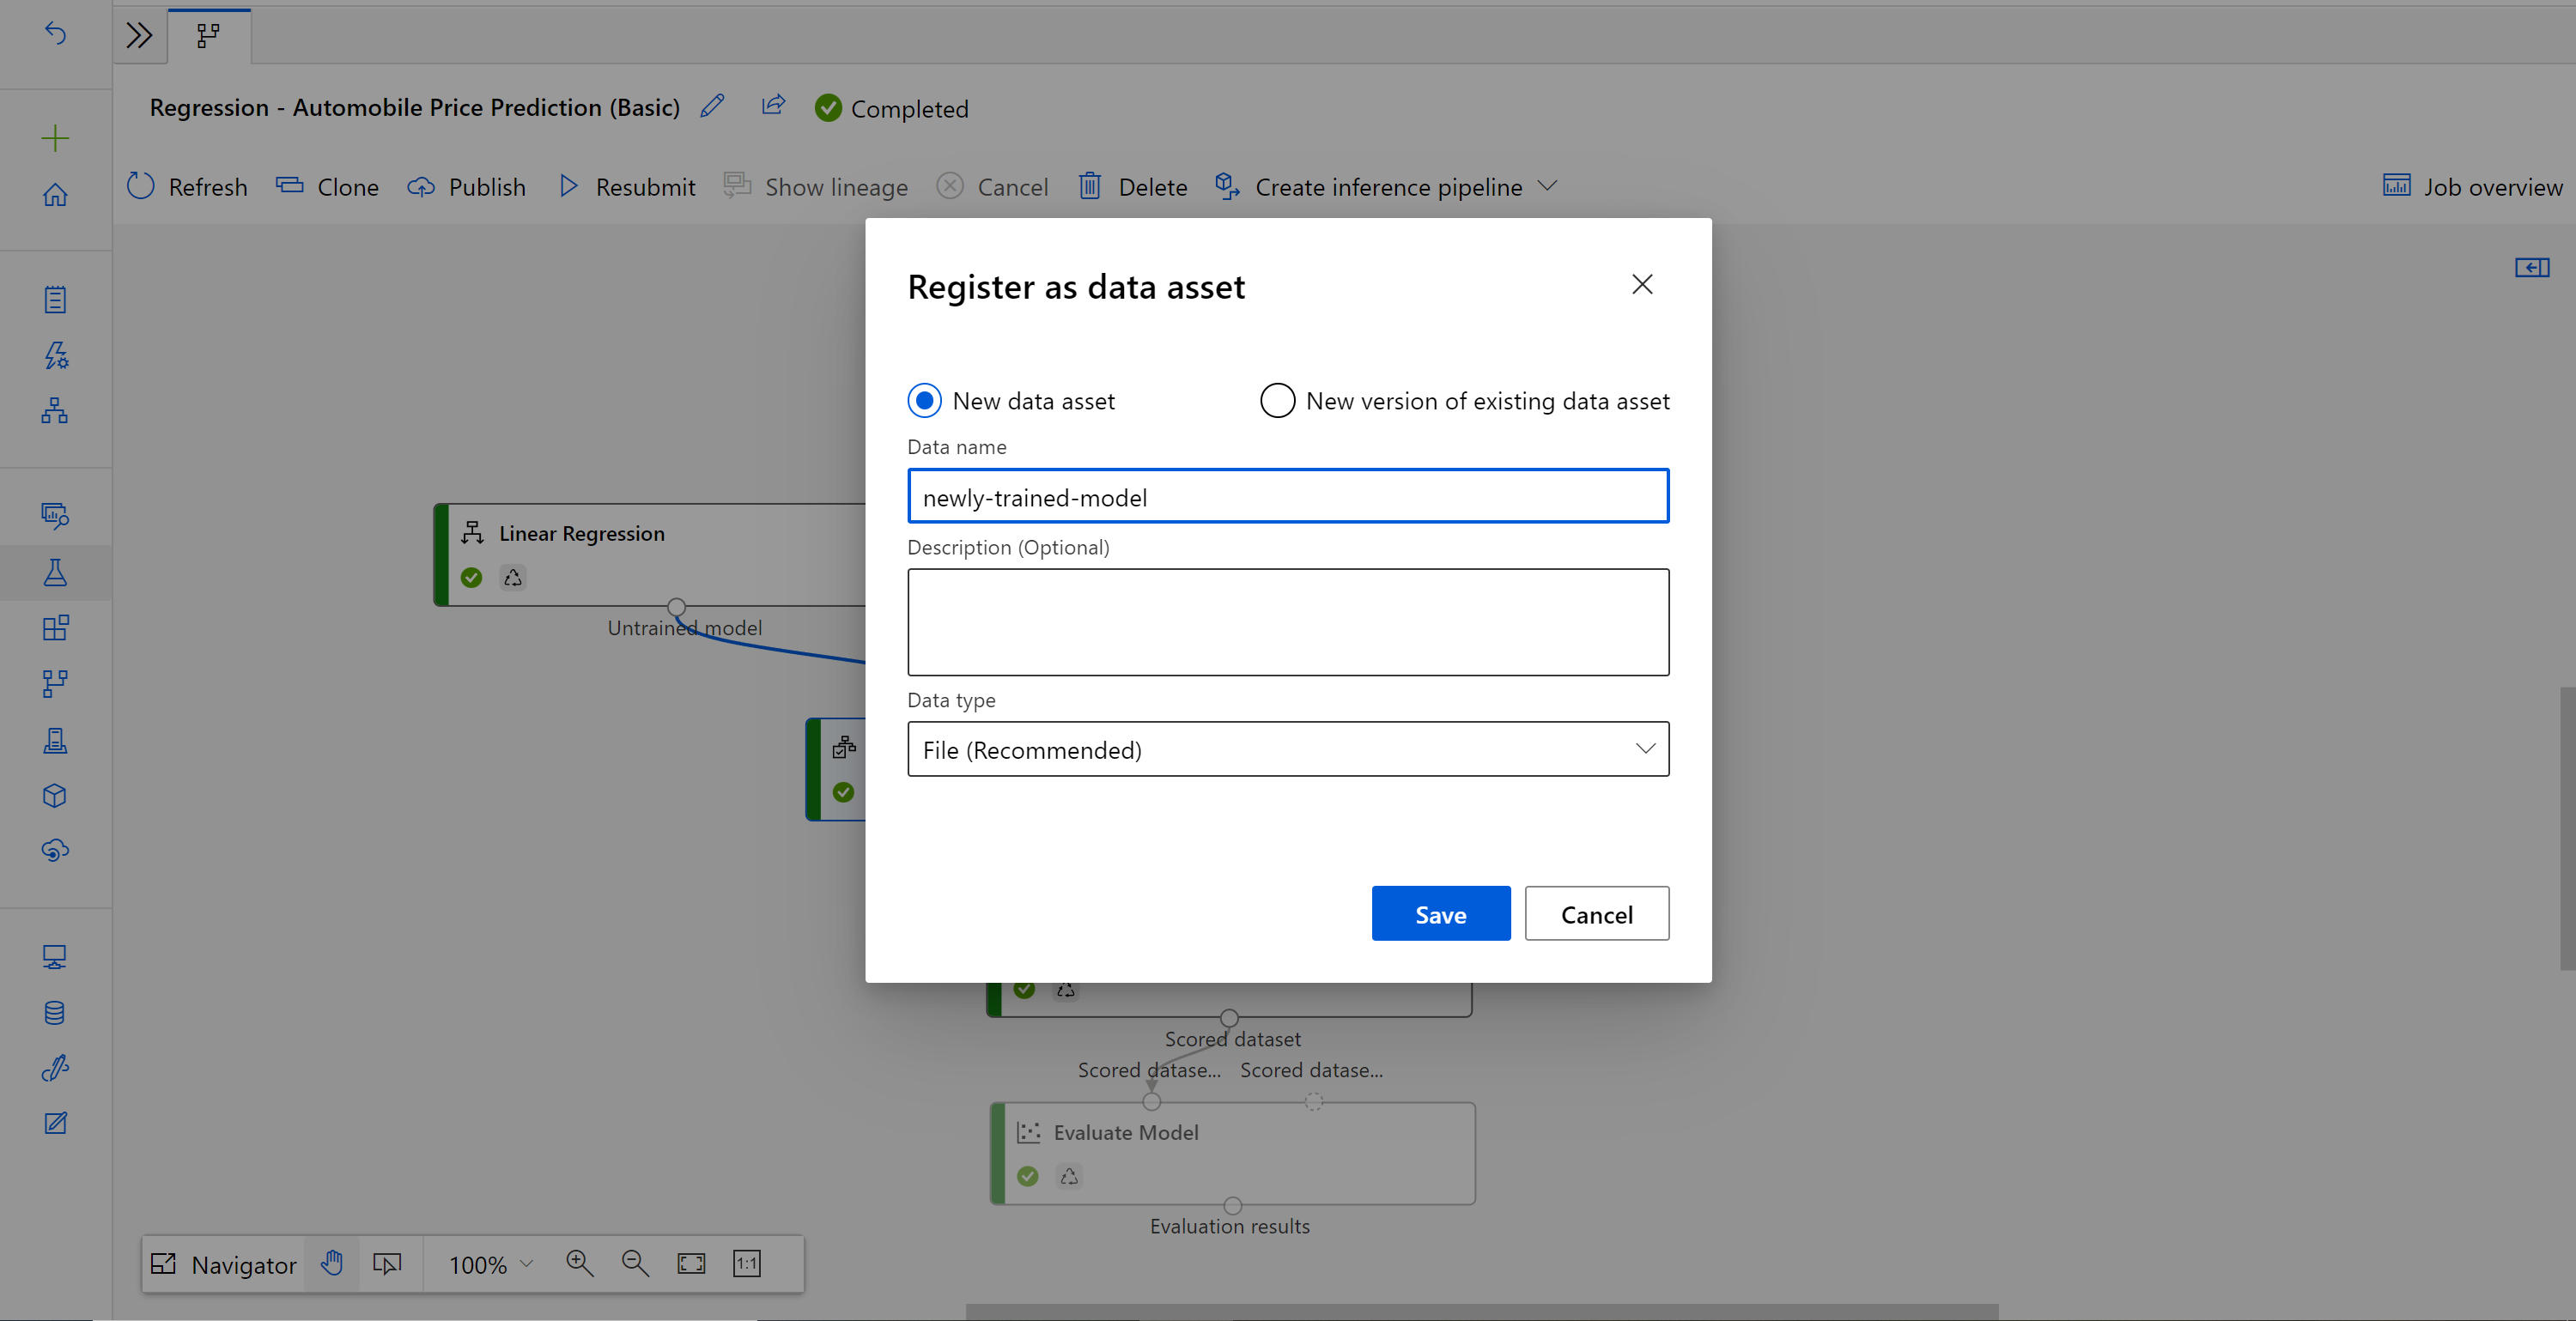 Screenshot of register as a data asset with new data asset selected.